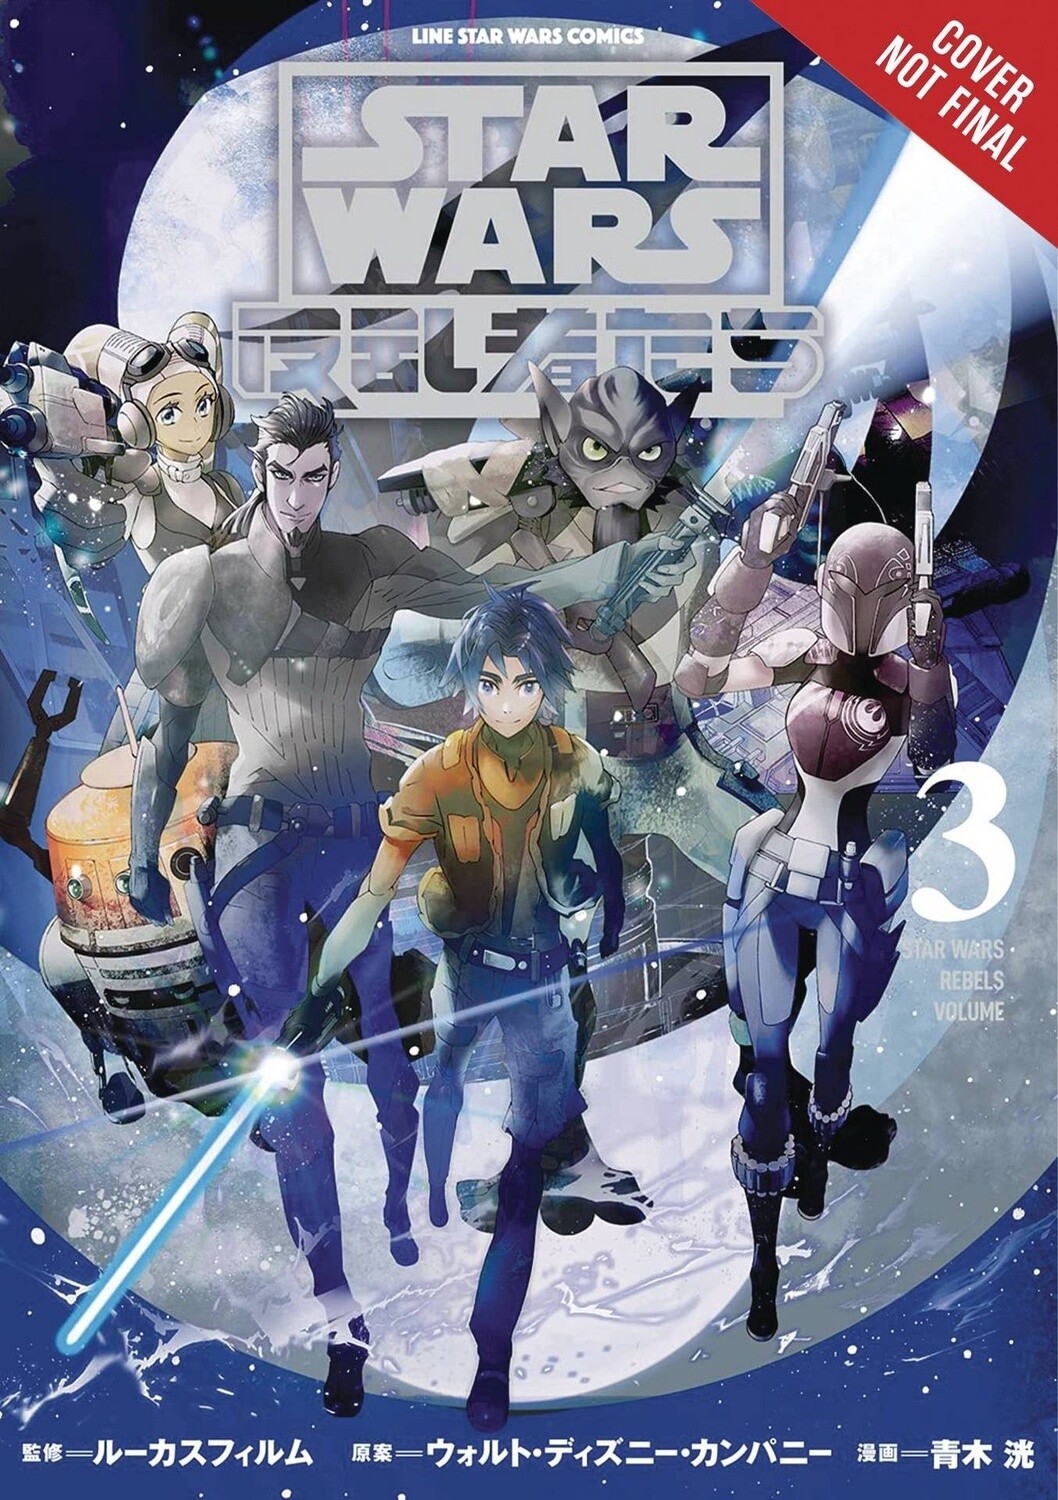 Star Wars Rebels Vol. 3